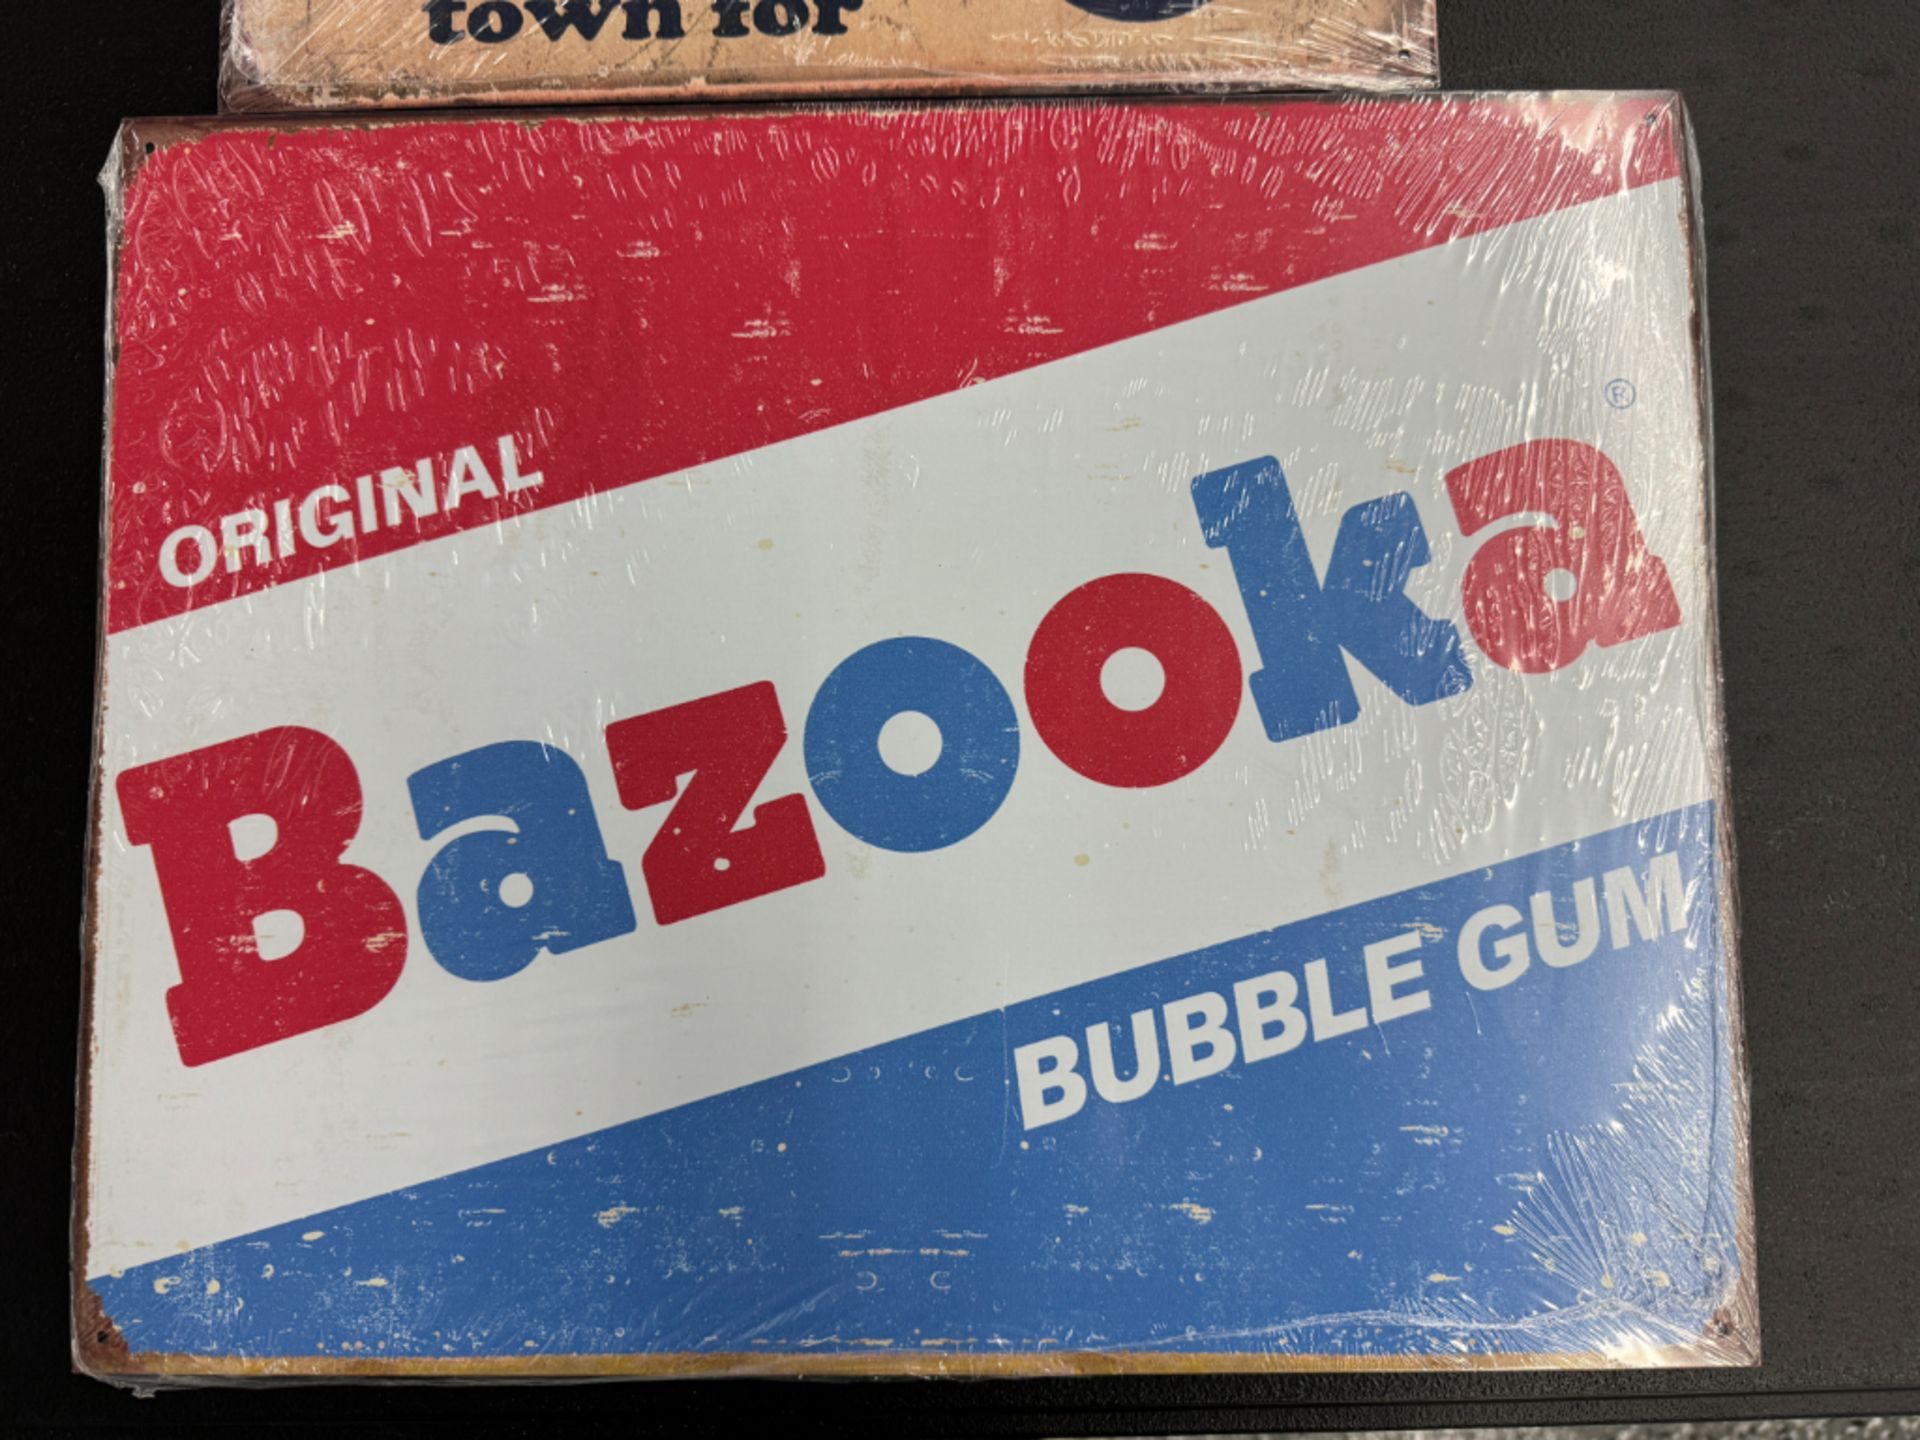 "2 Retro Vintage Signs" Moon Pie & Bazooka Bubble Gum - Image 3 of 3